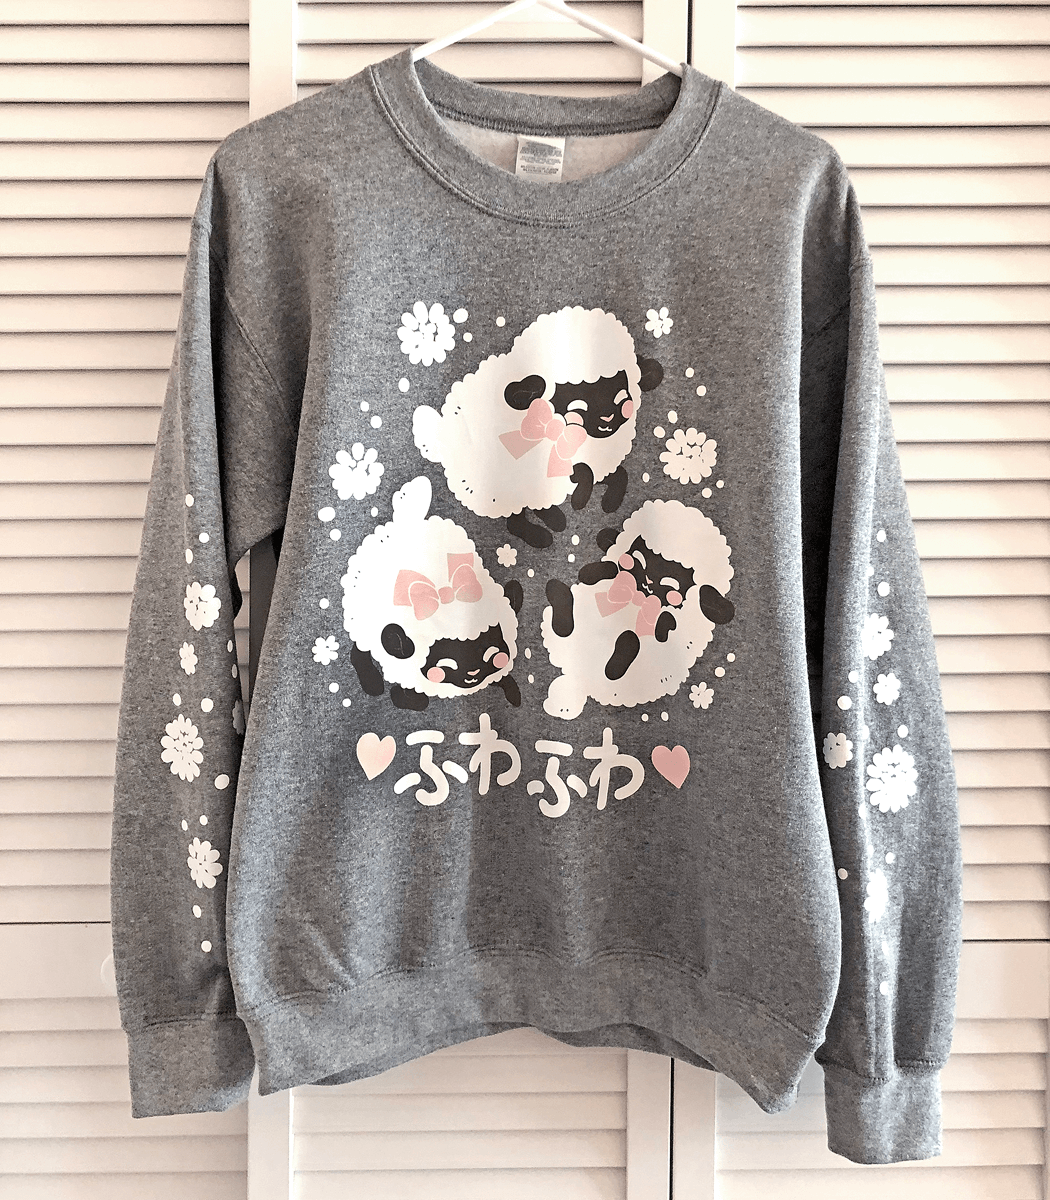 「Warm & cozy Fuwafuwa Sheep sweatshirts a」|✿ Celesse ✿のイラスト